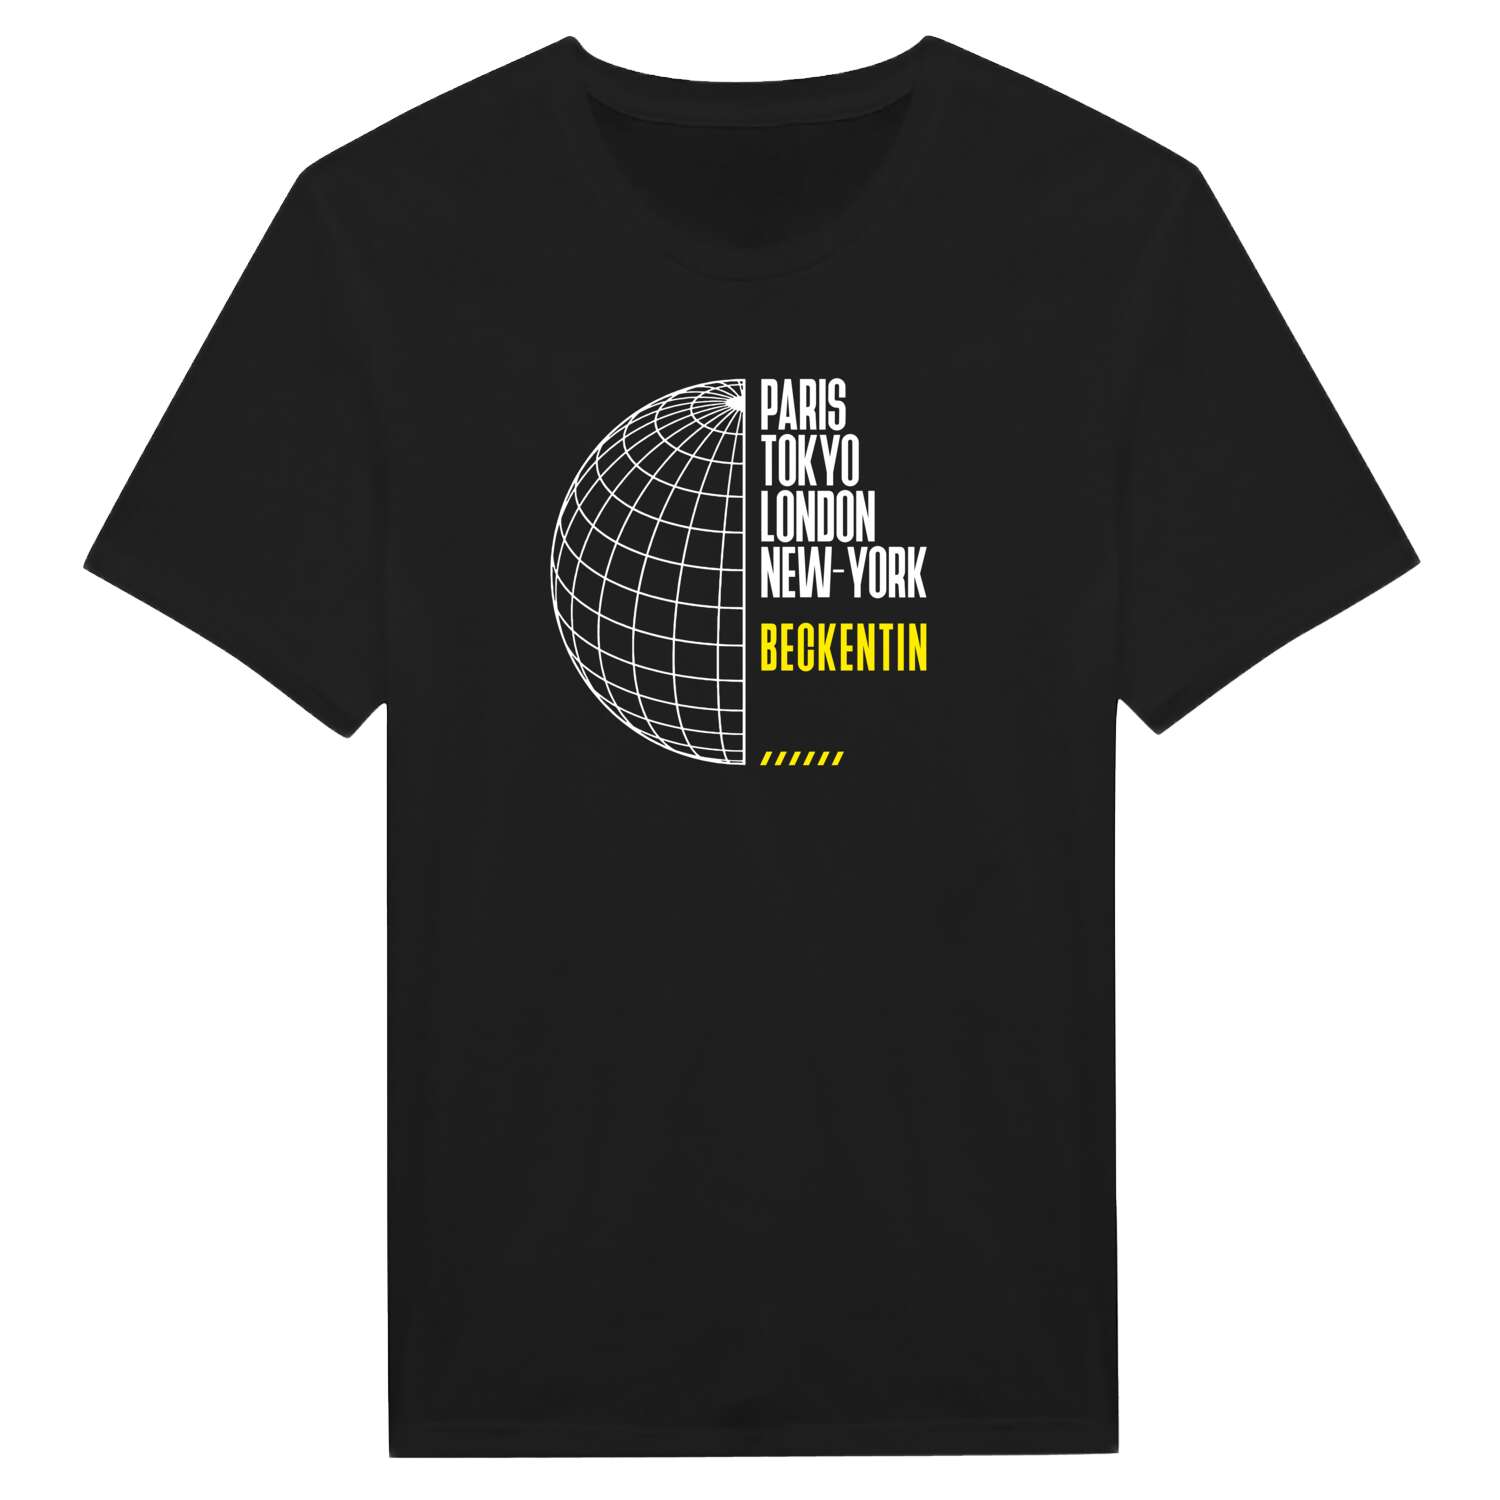 Beckentin T-Shirt »Paris Tokyo London«